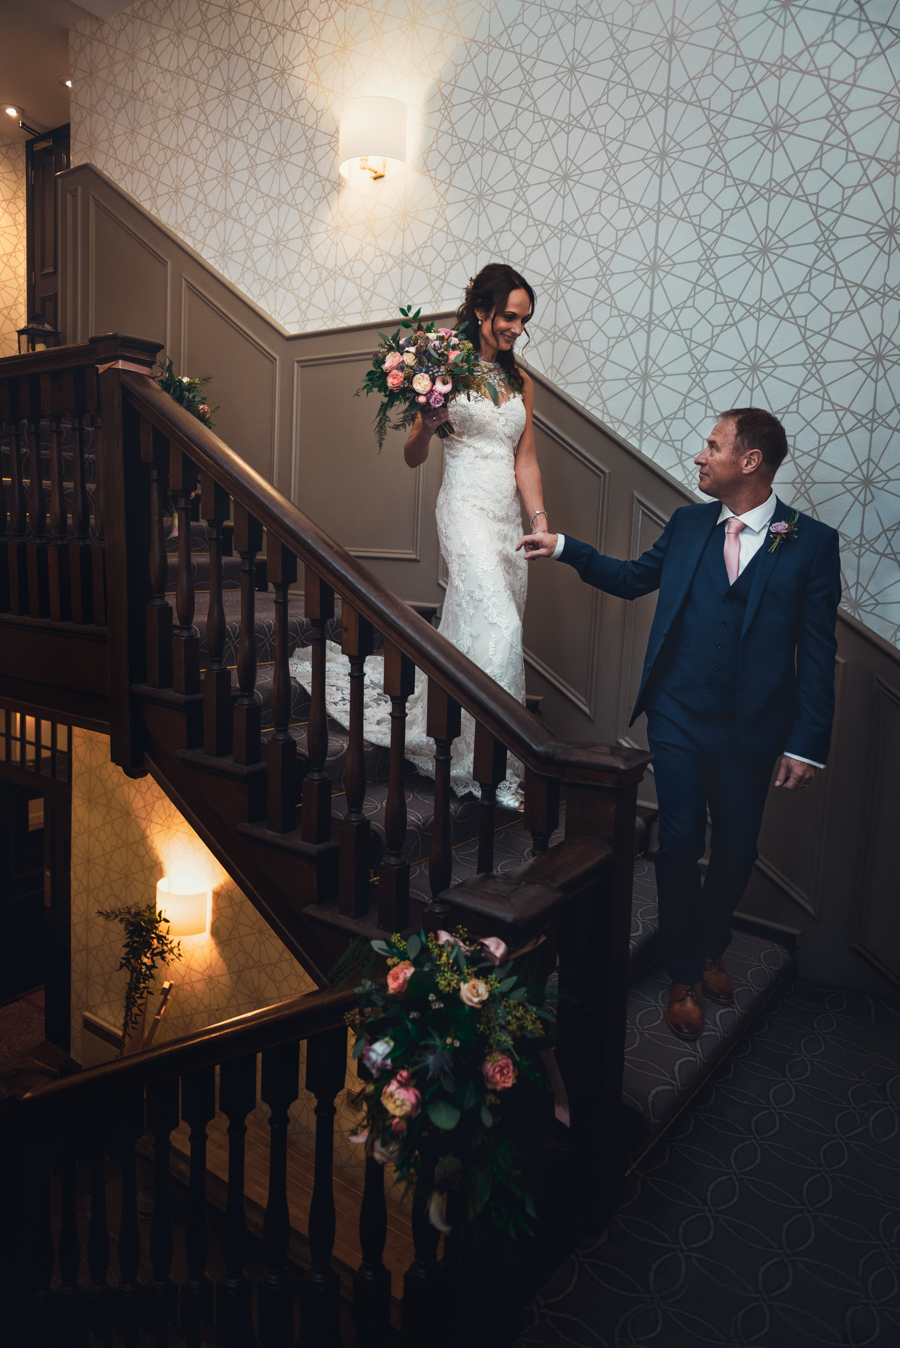 mobile villiers hotel buckingham 2019 wedding jacob everitt photography-8